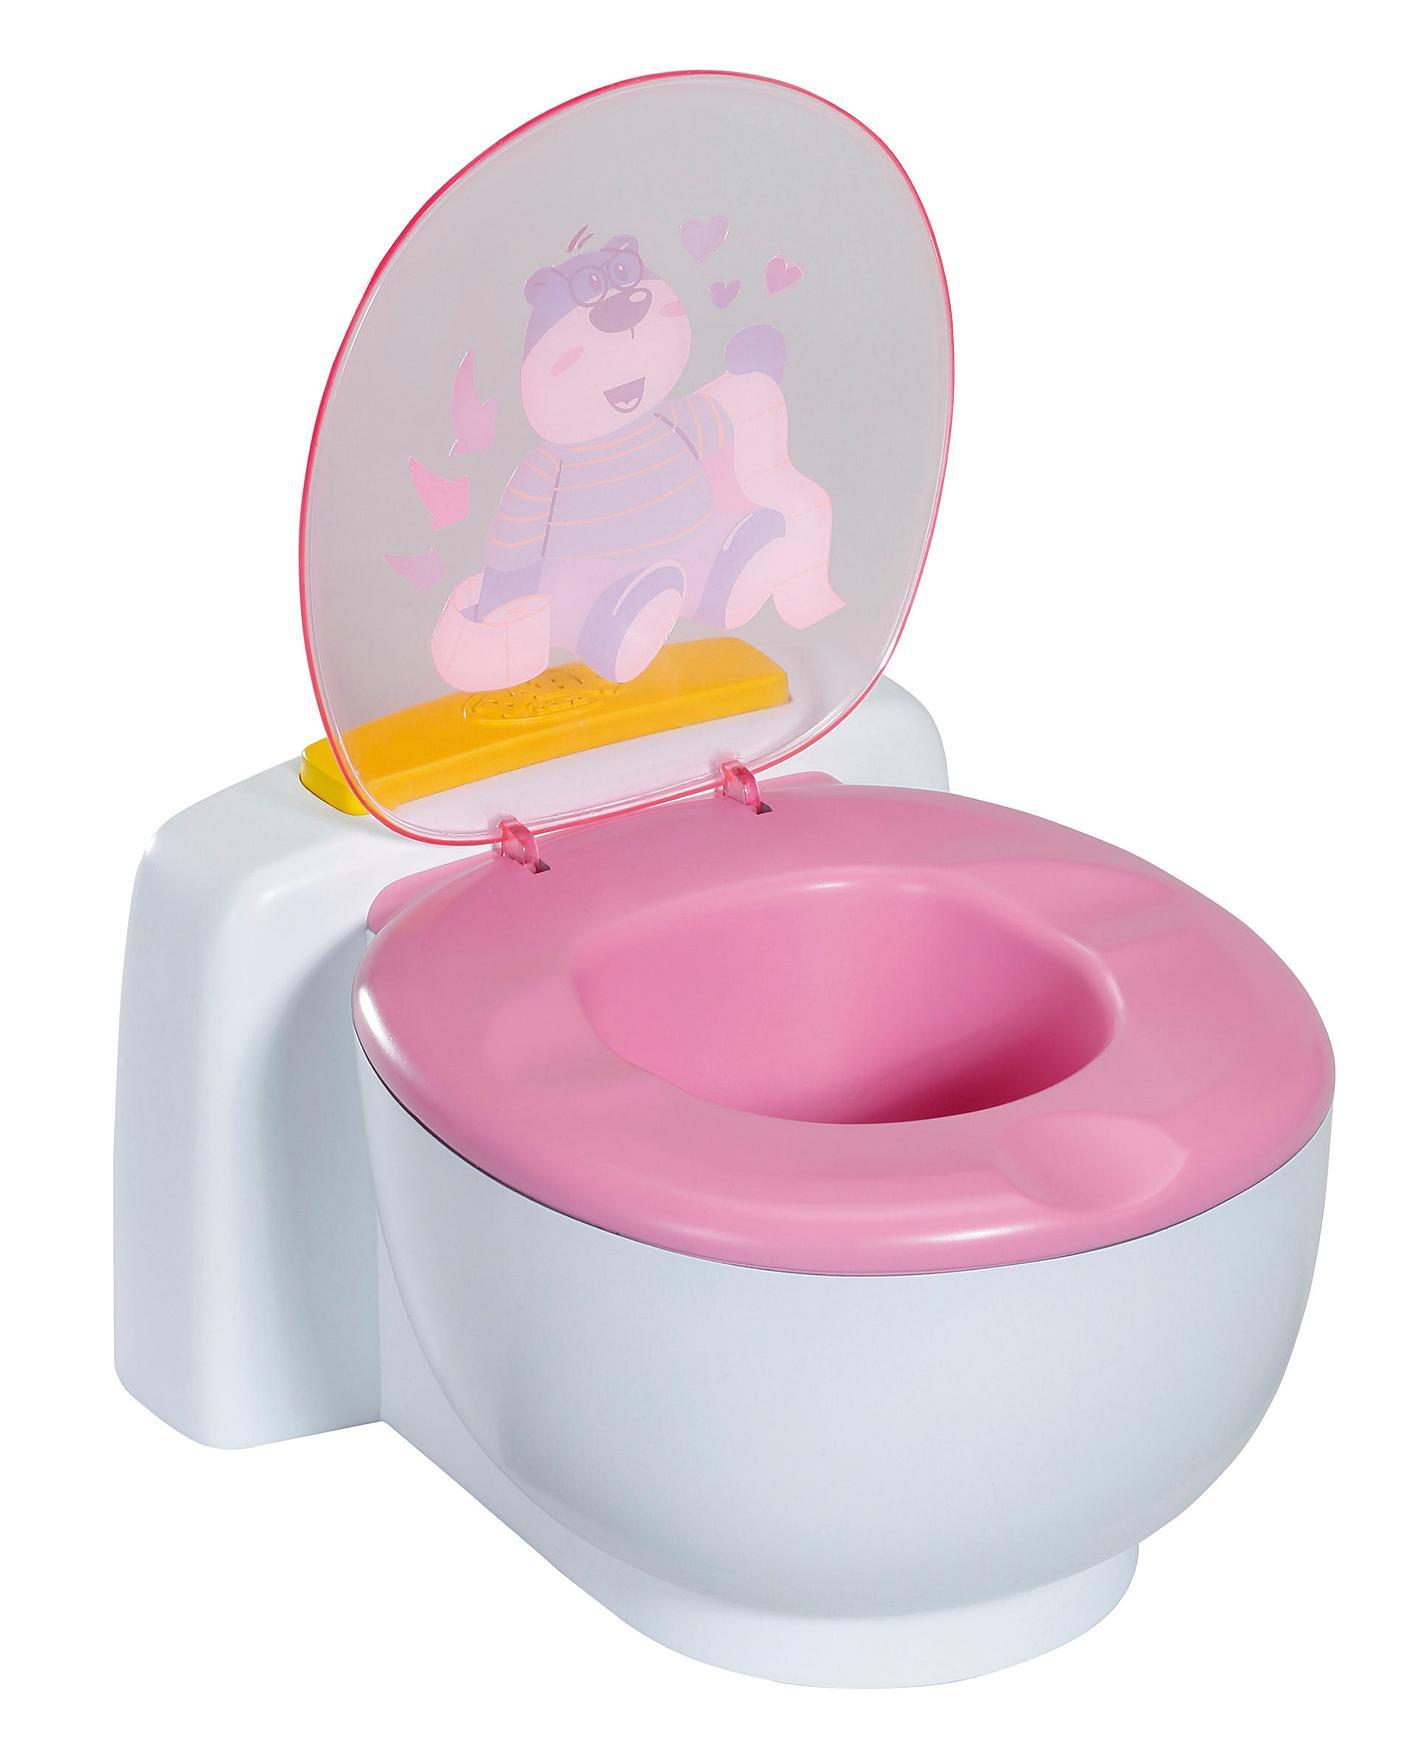 Baby born bath poo toilet img1